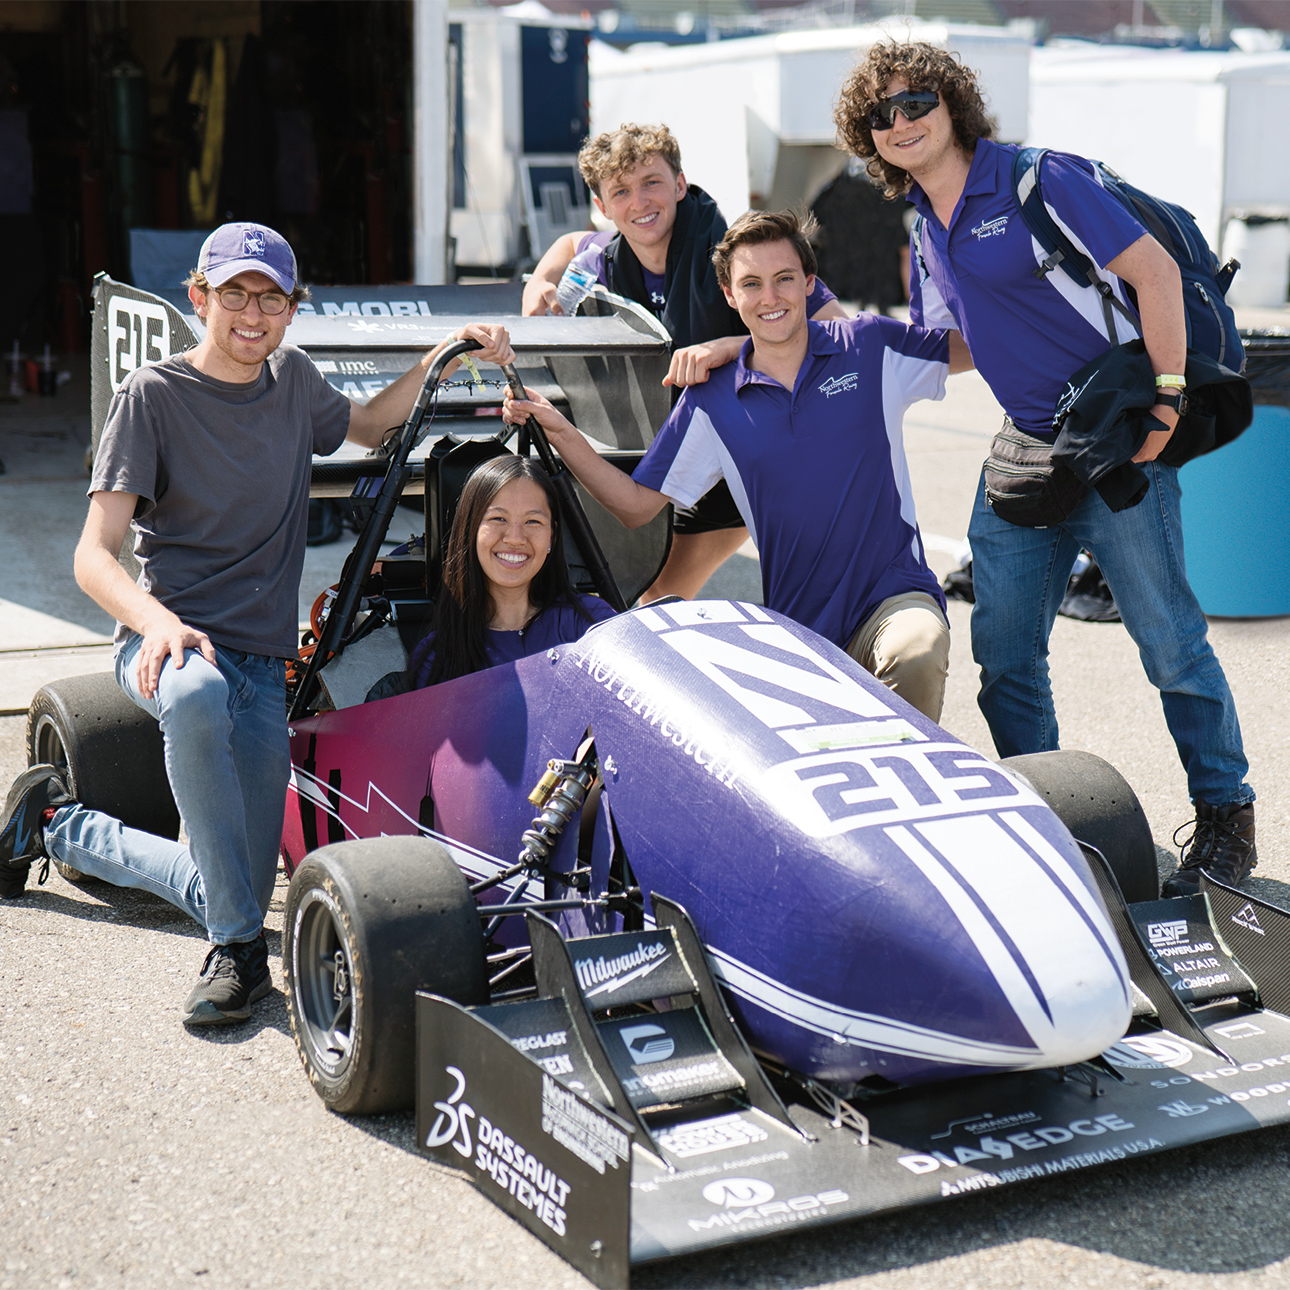 Team smiles around a Northwestern branded race car